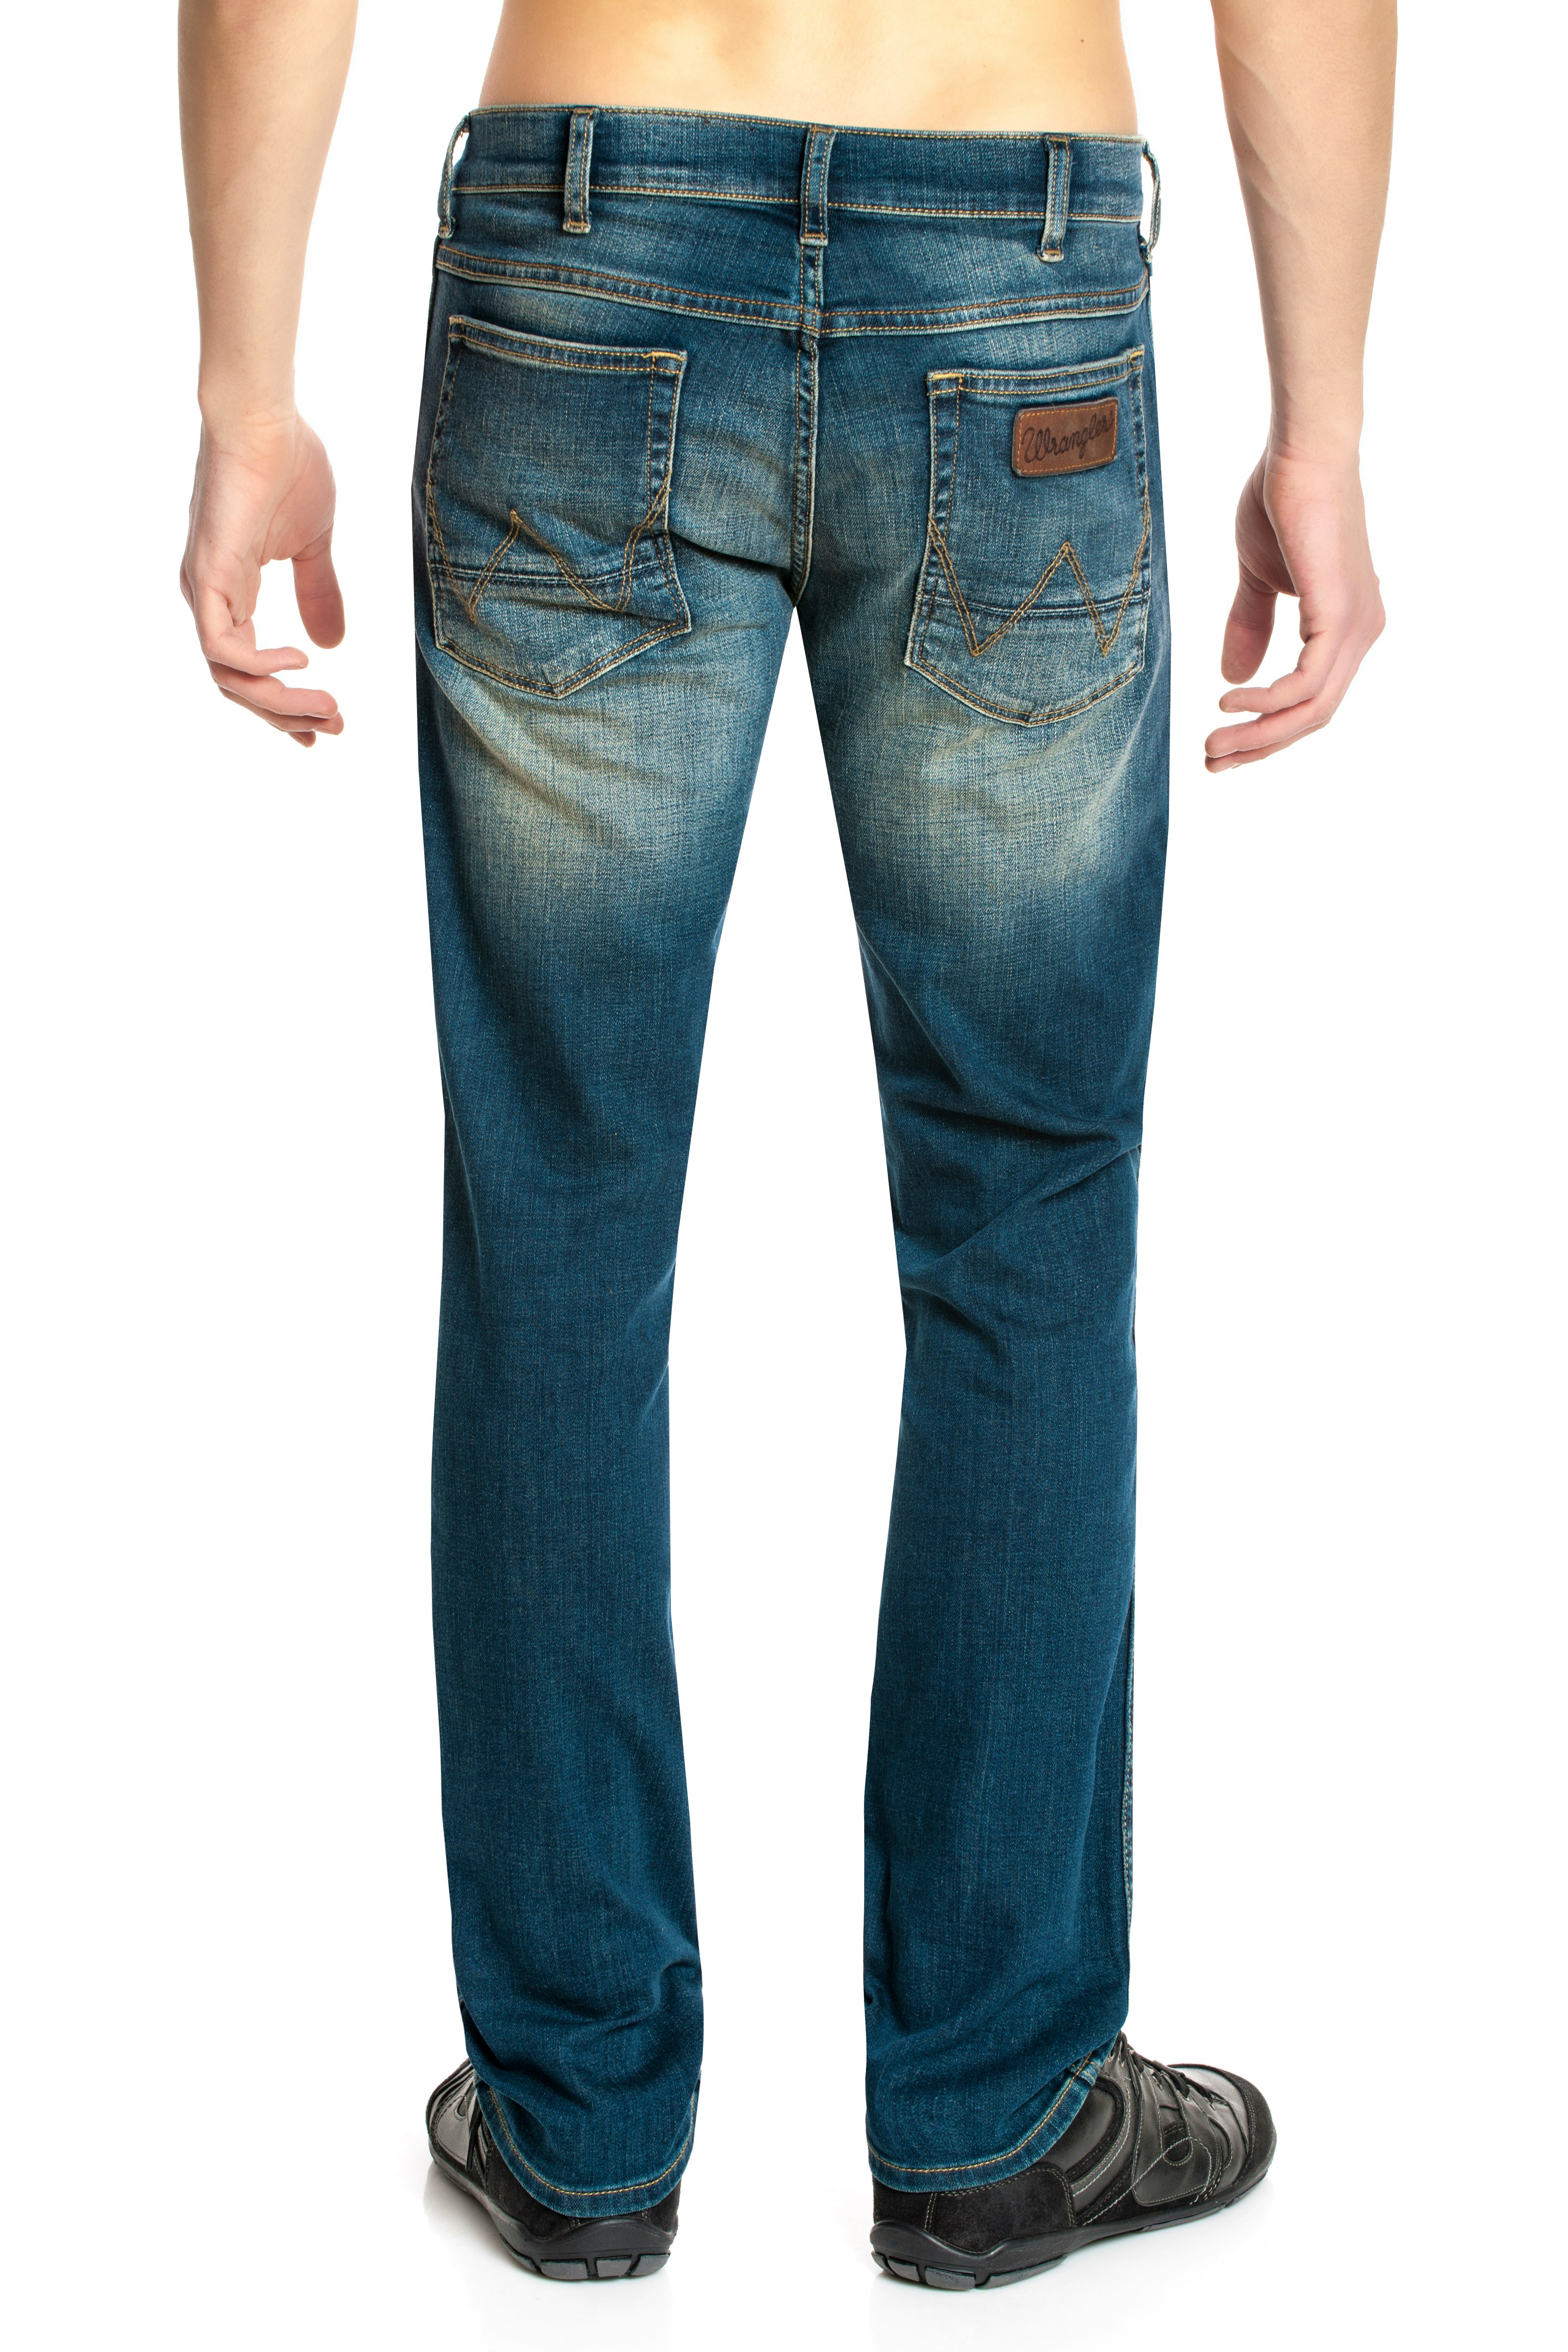 Wrangler Jeans Greensboro